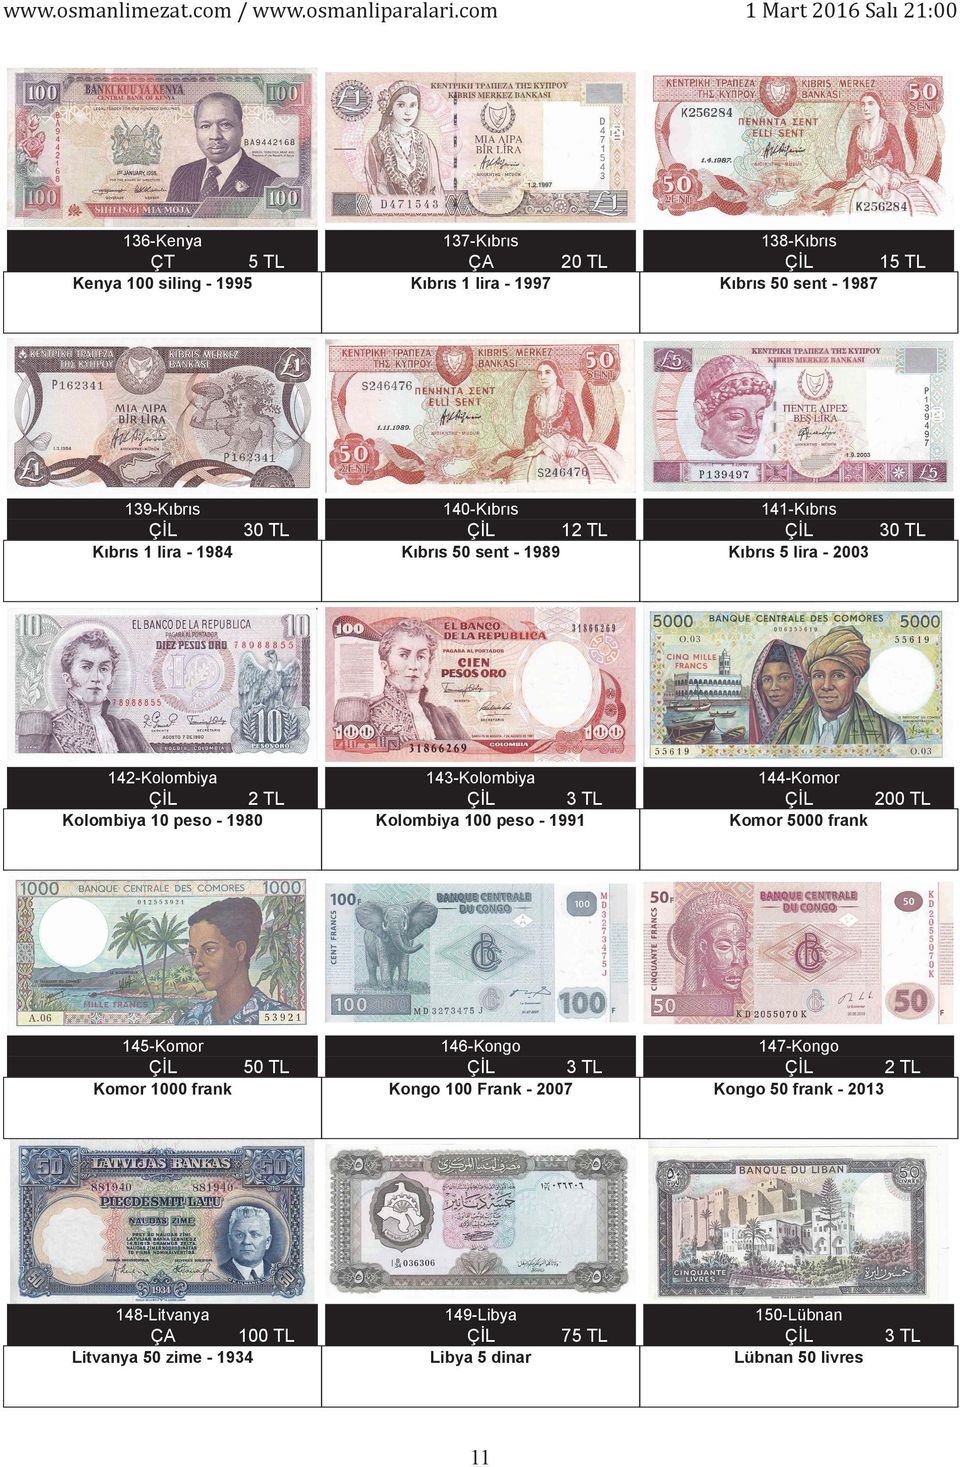 peso - 1980 Kolombiya 100 peso - 1991 Komor 5000 frank 145-Komor 146-Kongo 147-Kongo Komor 1000 frank 148-Litvanya 50 TL 100 TL